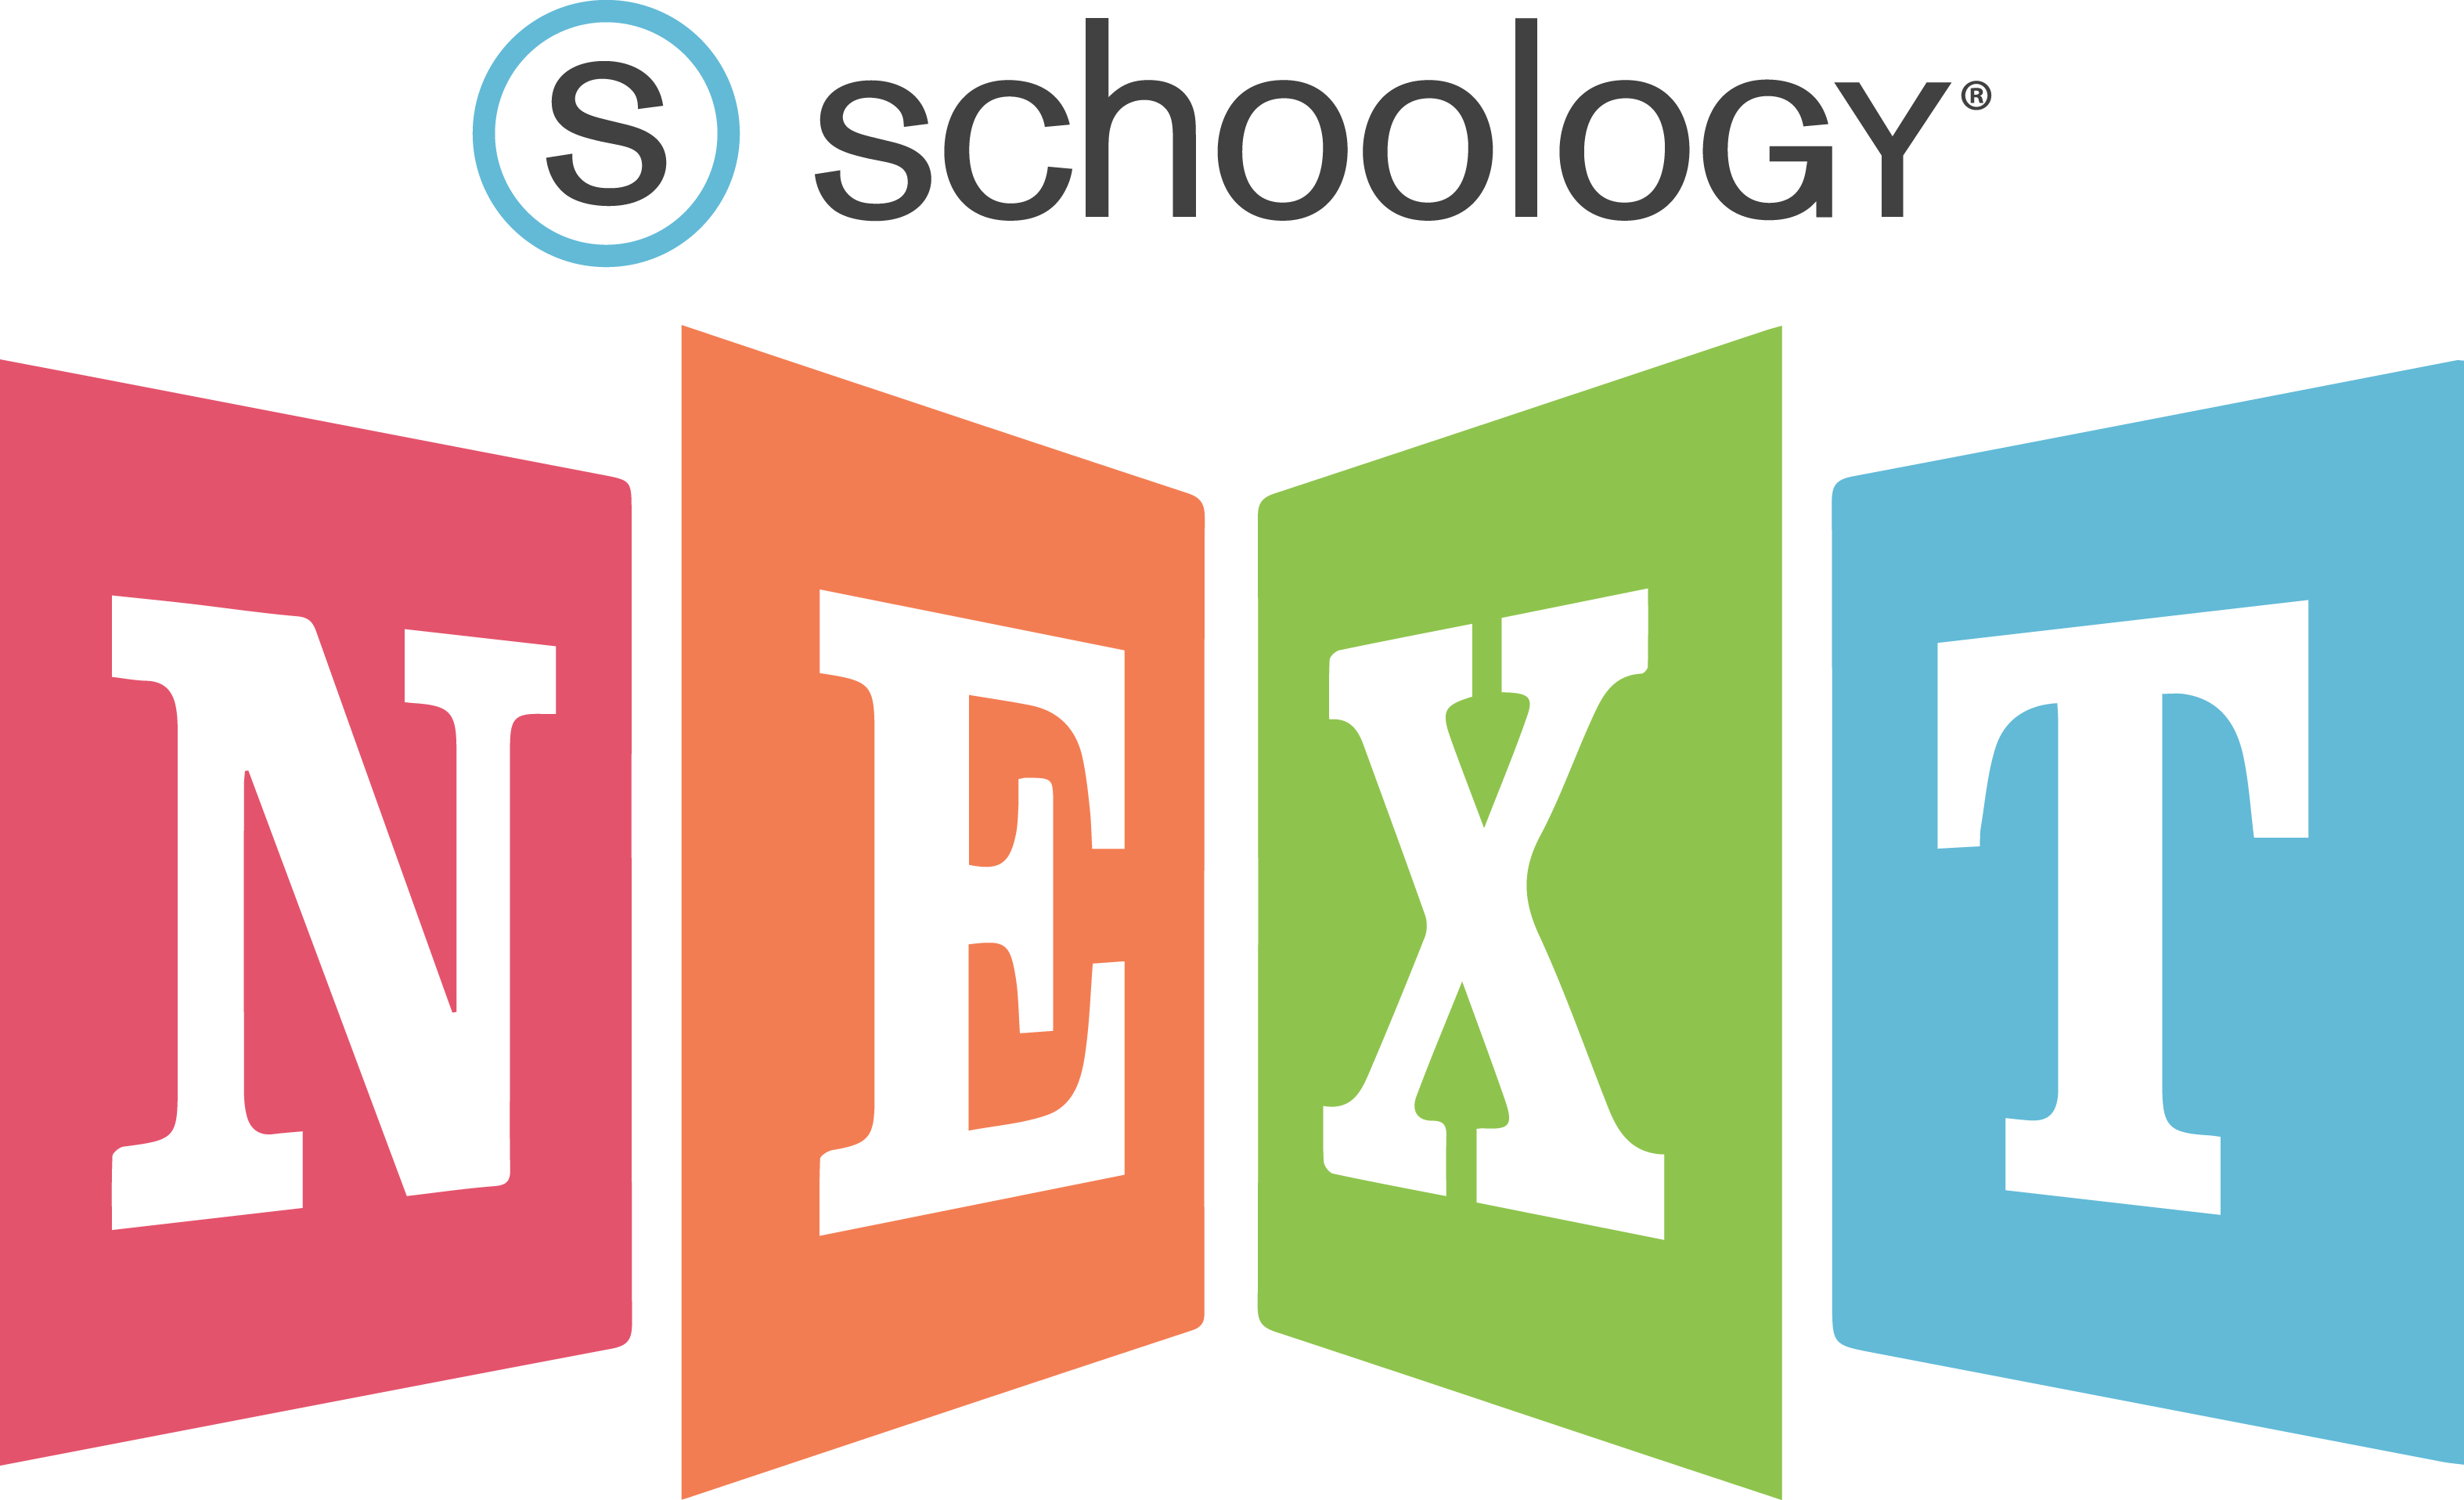 Schoology NEXT 2017 • Talk Tech With Me